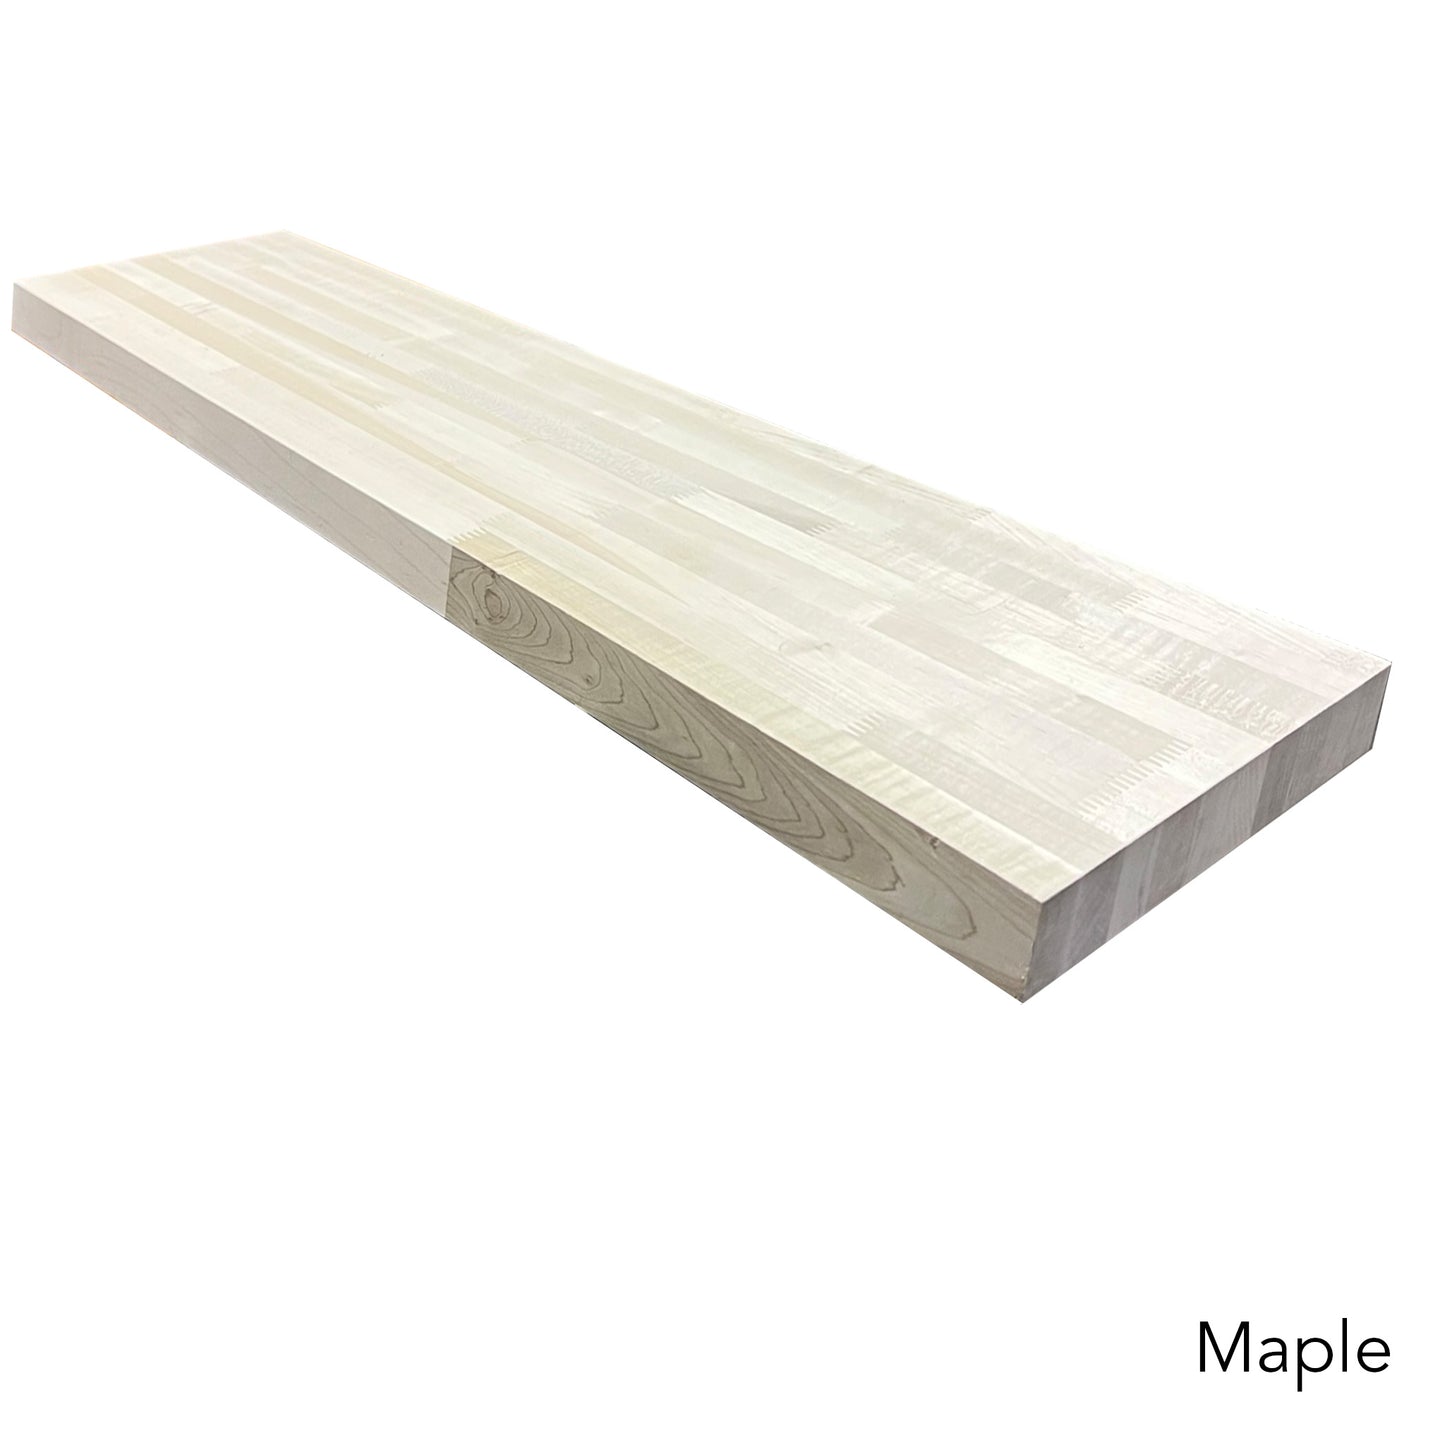 Wooden Shelf in Maple Butcher Block